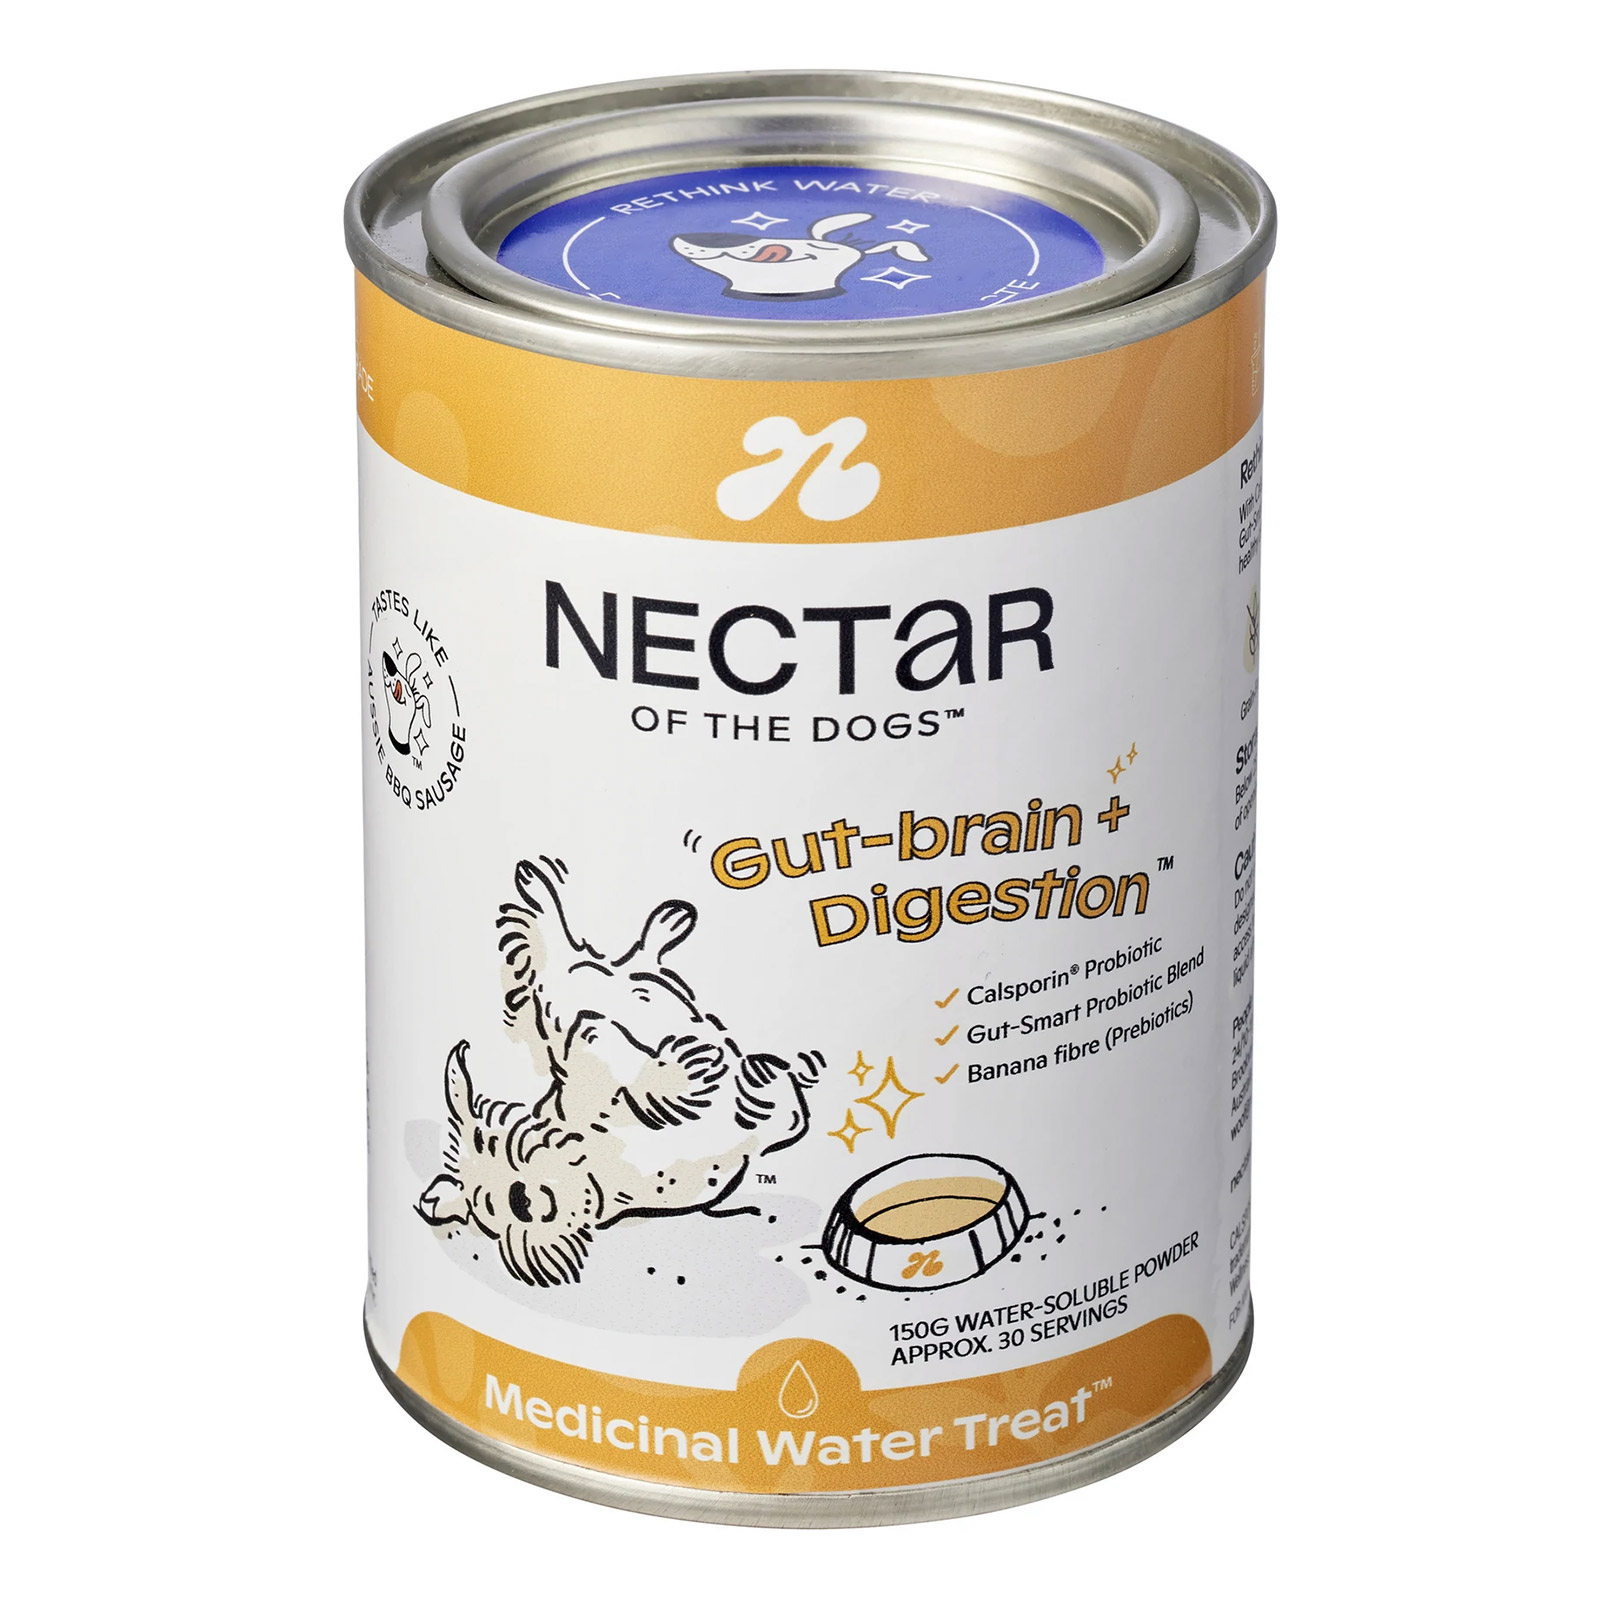 Nectar Gut Brain & Digestion Powder